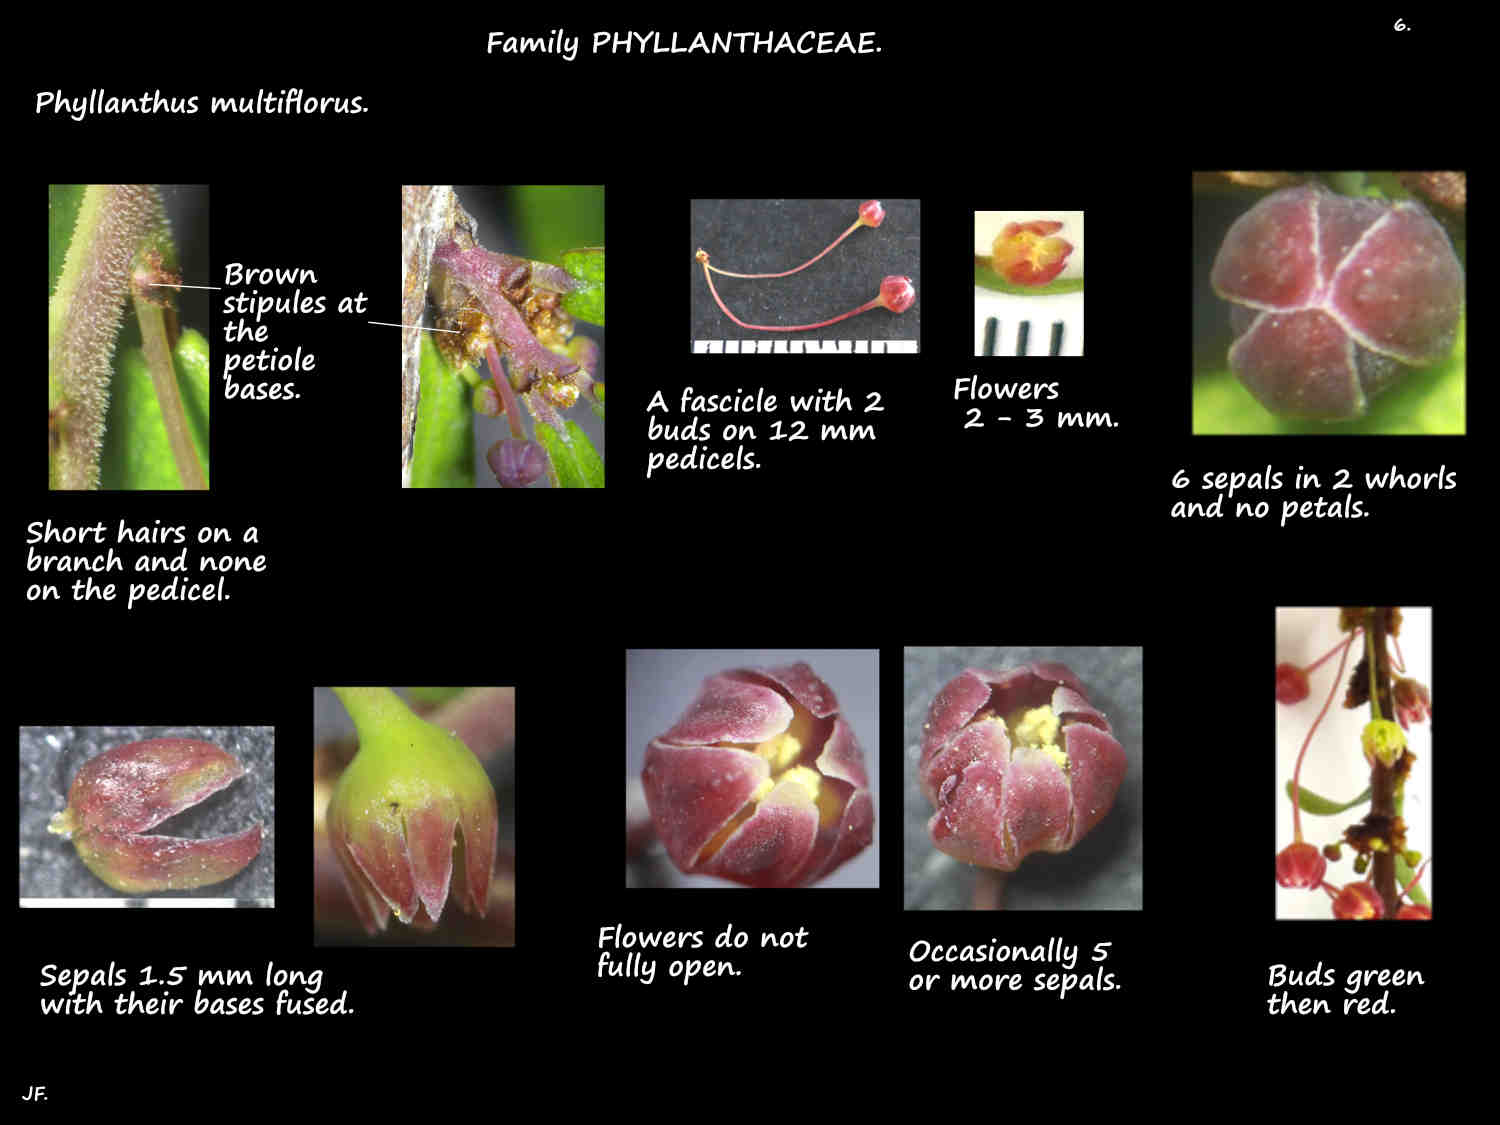 6 Sepals & no petals on Phyllanthus multiflorus flowers